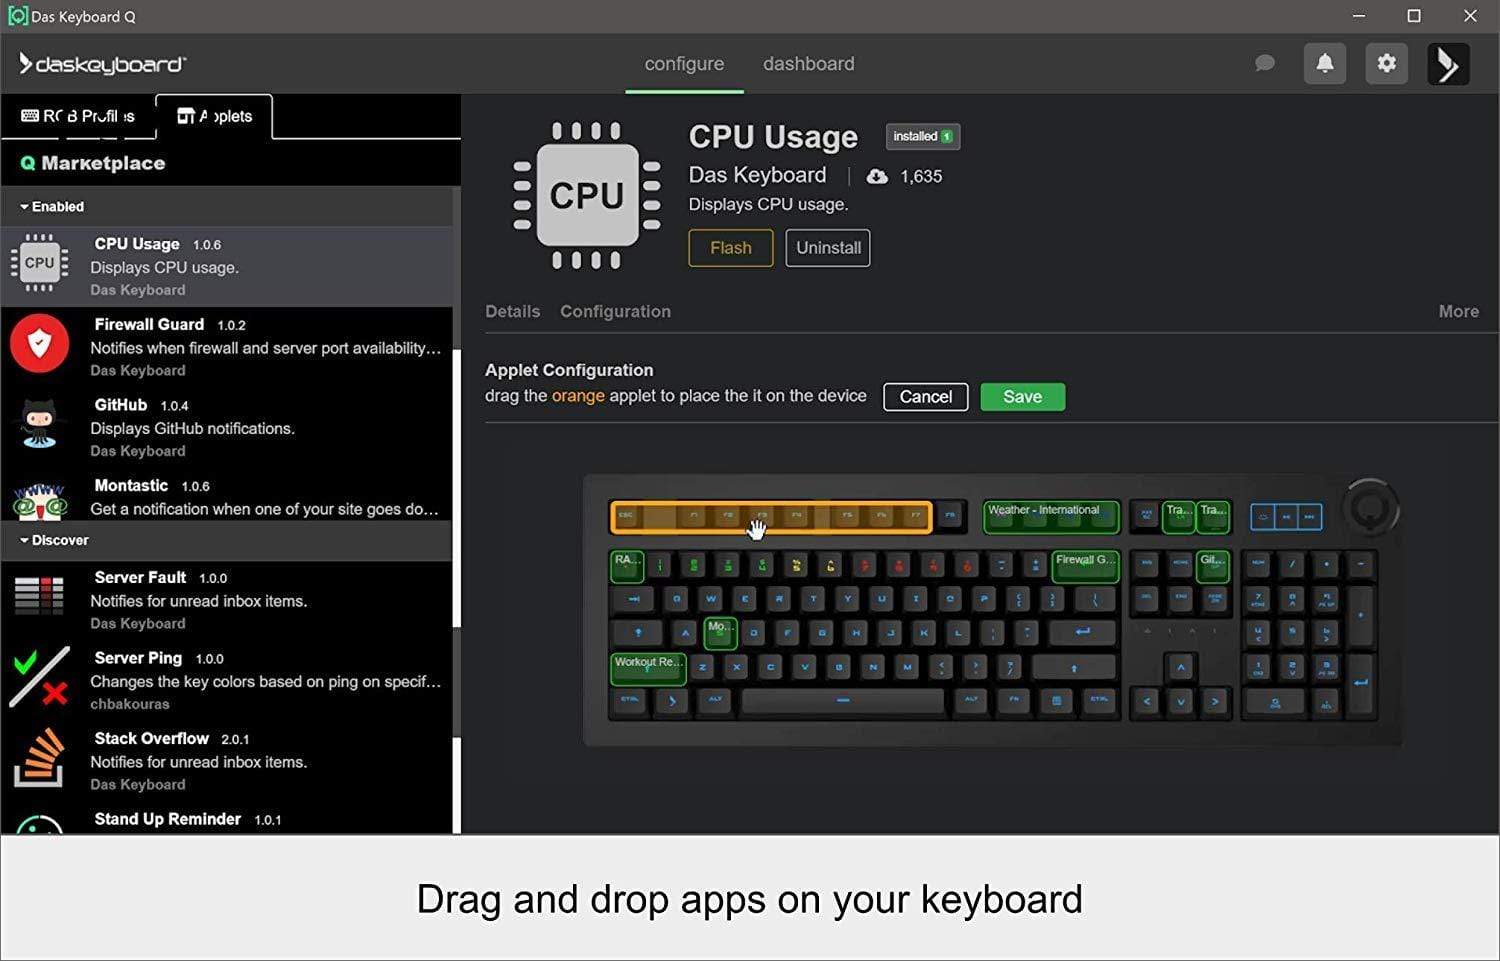 Das Keyboard Keyboard Das Keyboard 4Q: World’S First Smart RGB Cherry MX Mechanical Keyboard - Brown Soft Tactile